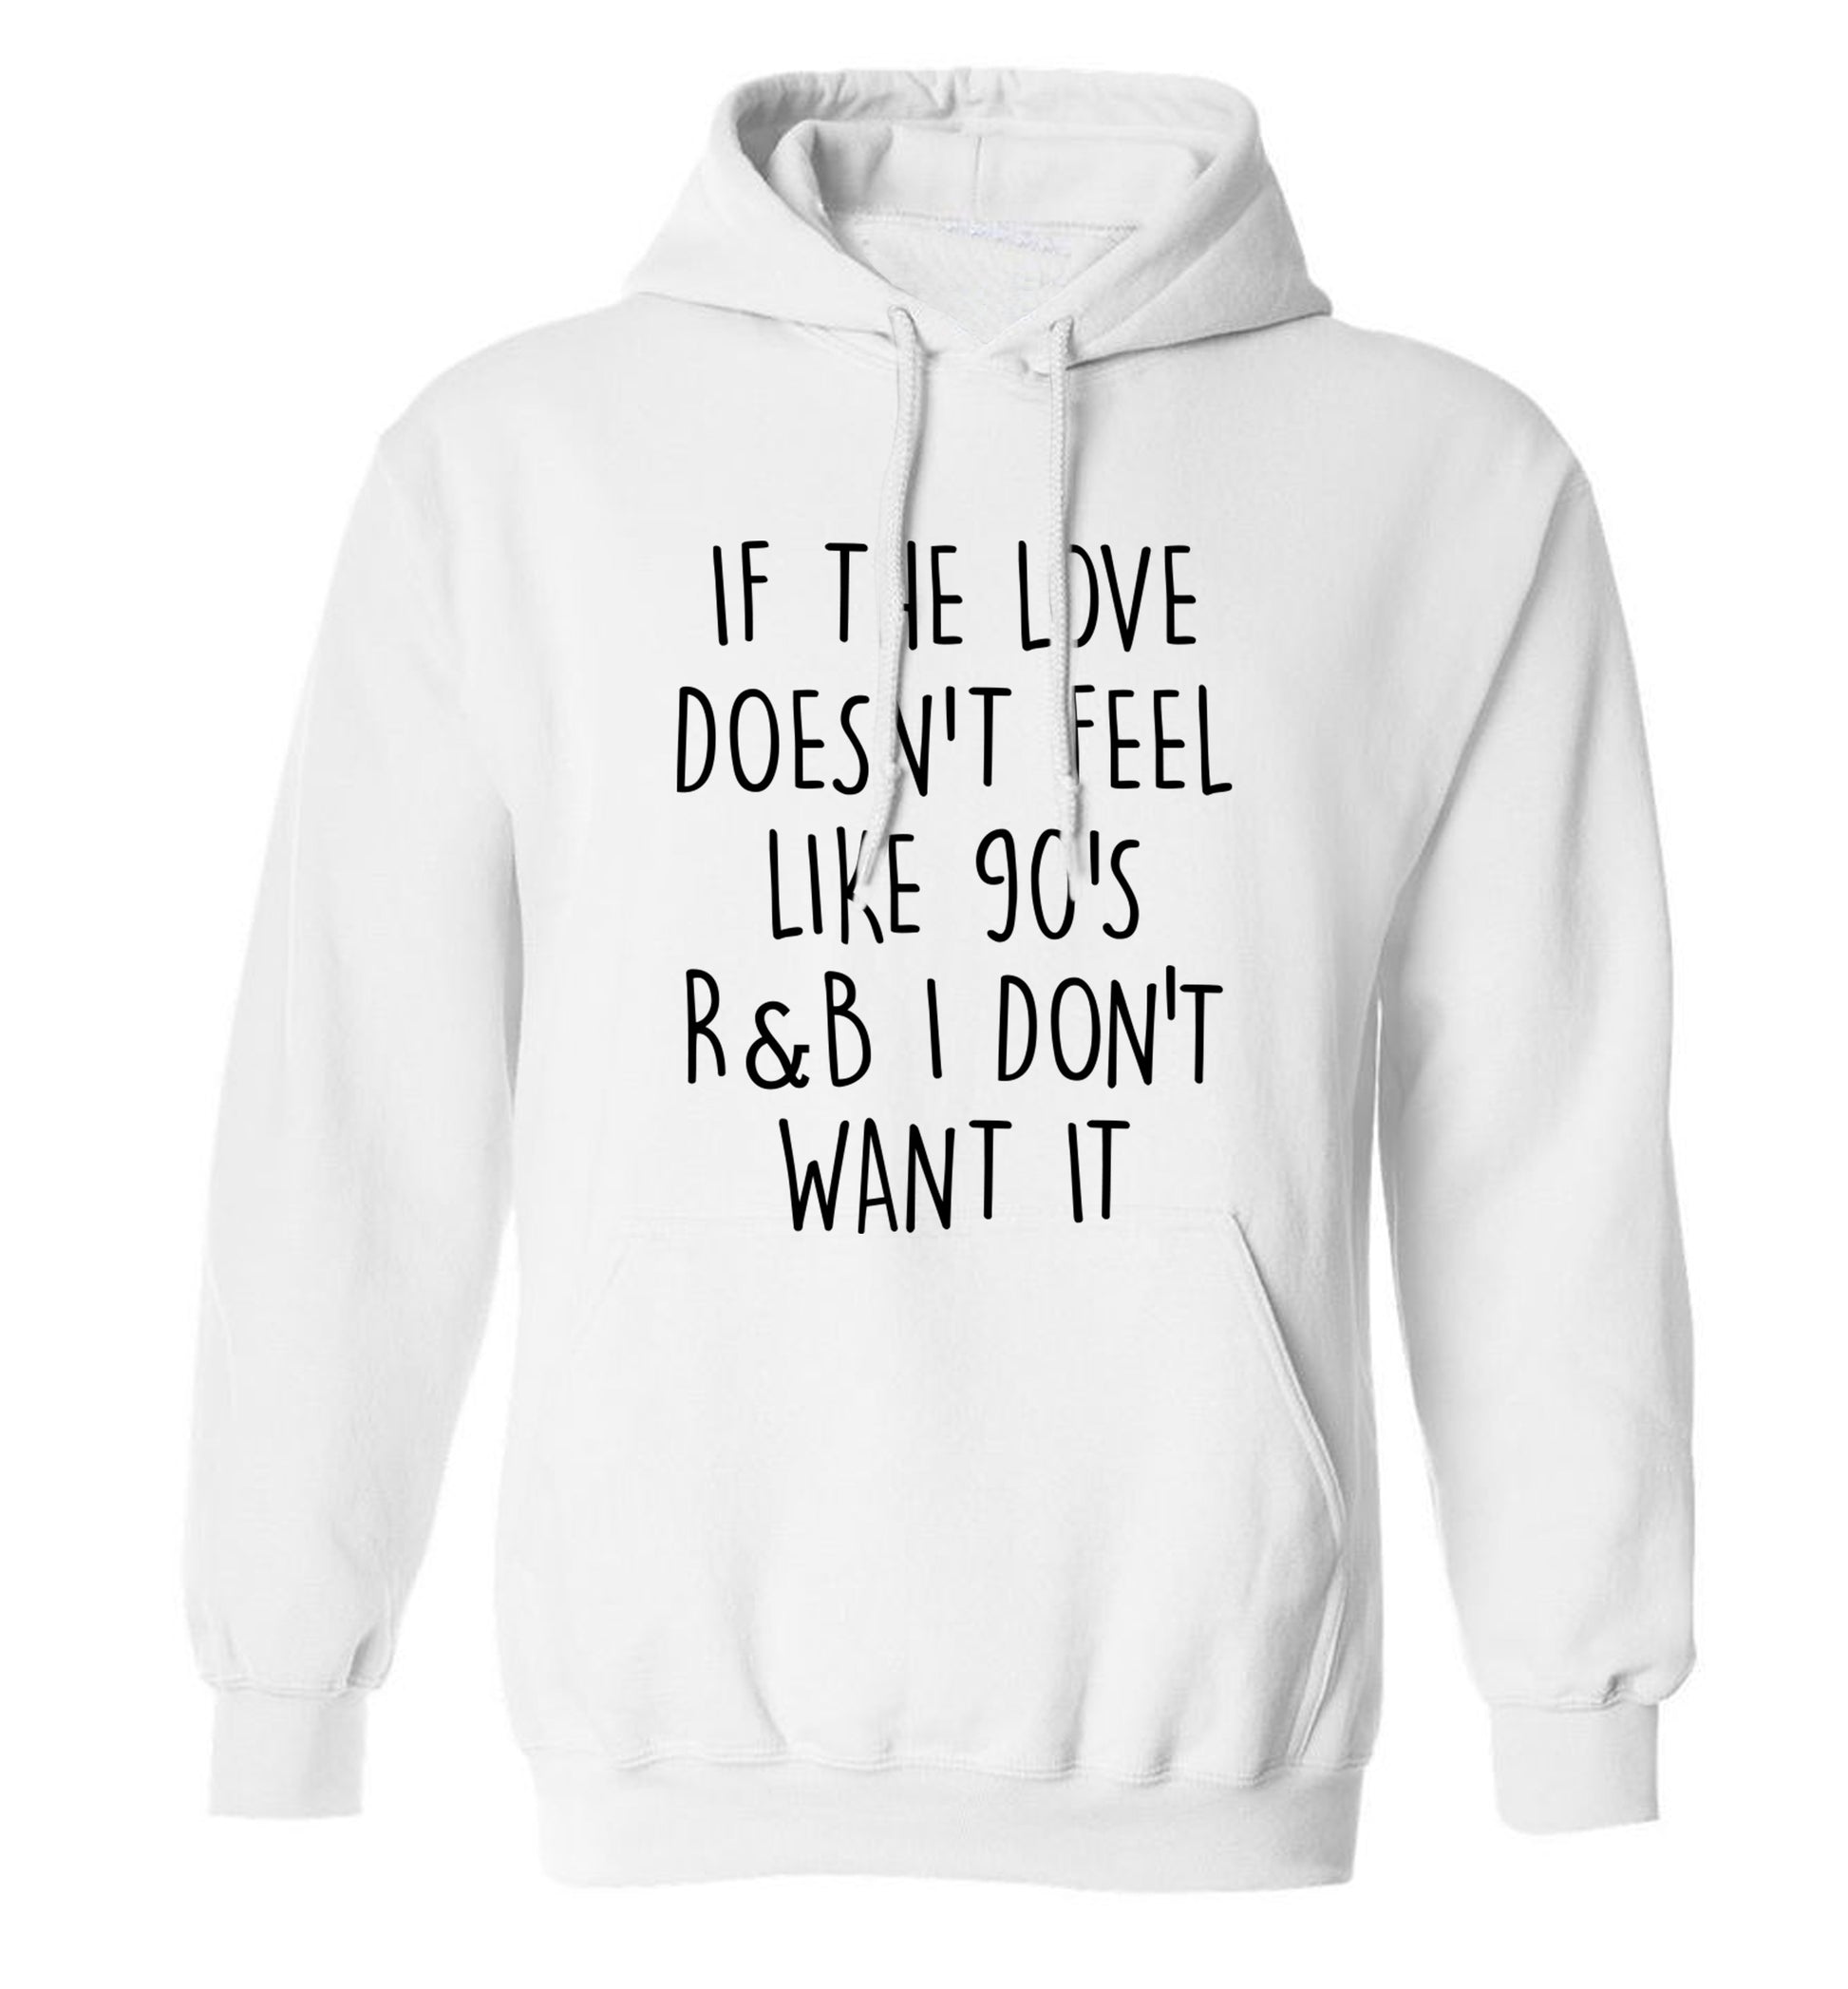 If the love doesn't feel like 90's R&B I don't want it adults unisex white hoodie 2XL